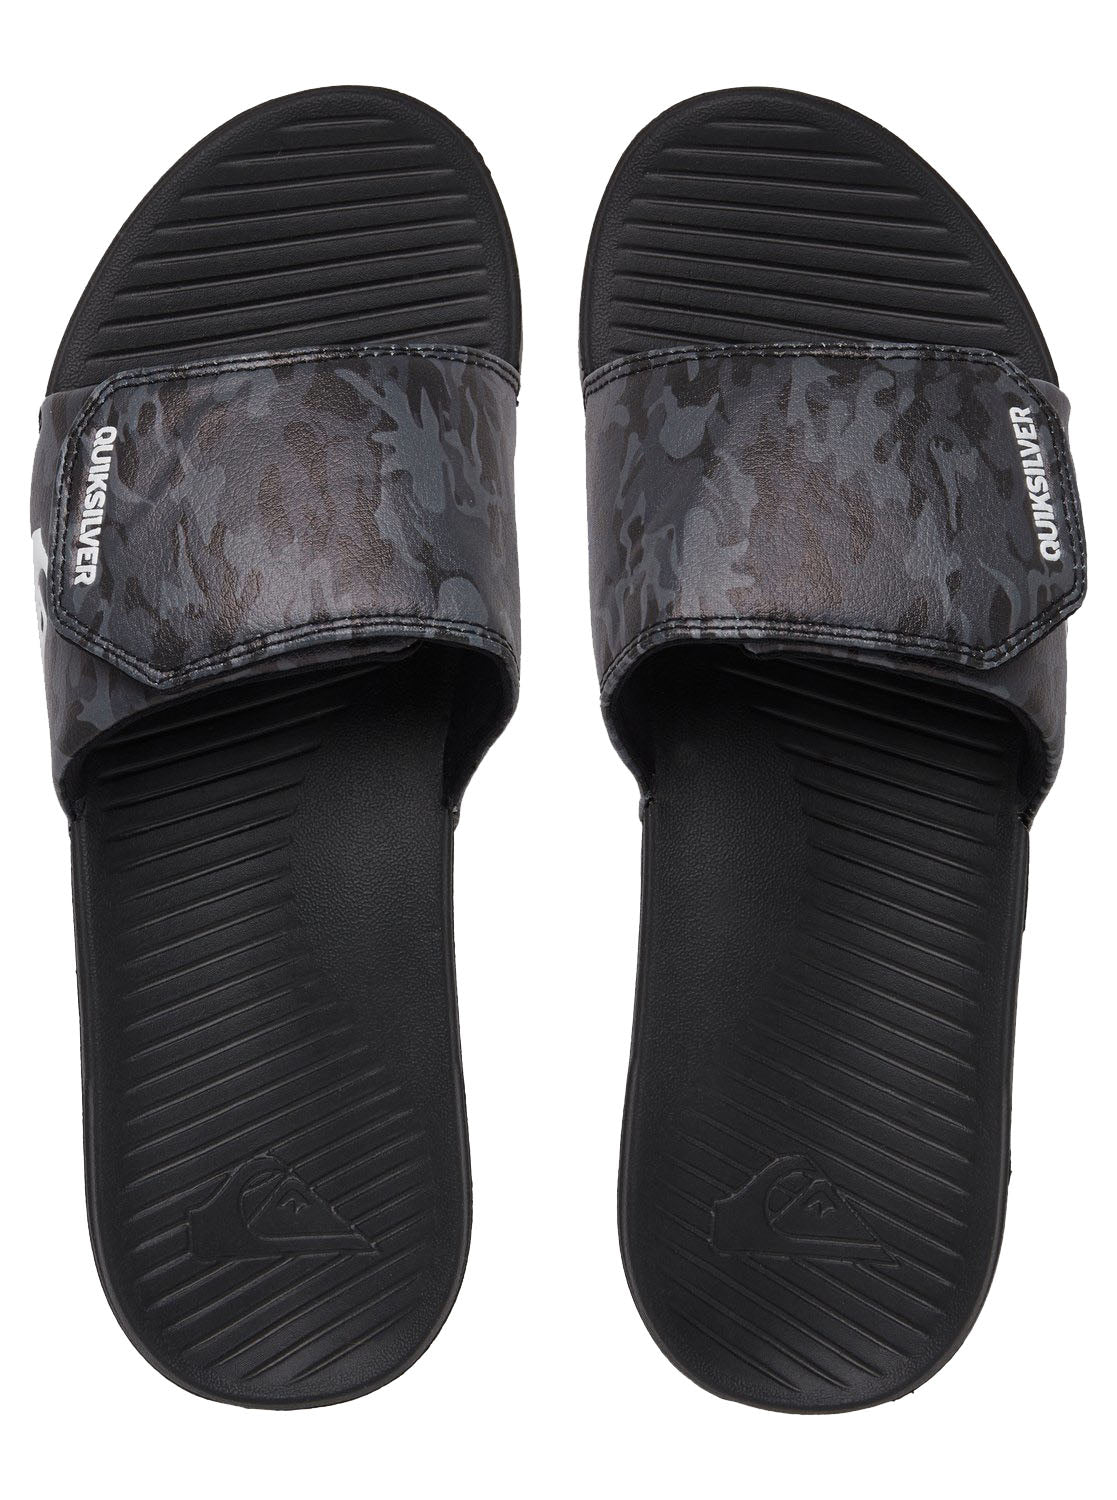 Quiksilver Bright Coast Adjust Mens Sandal XSKK-Grey-Black-Black 10